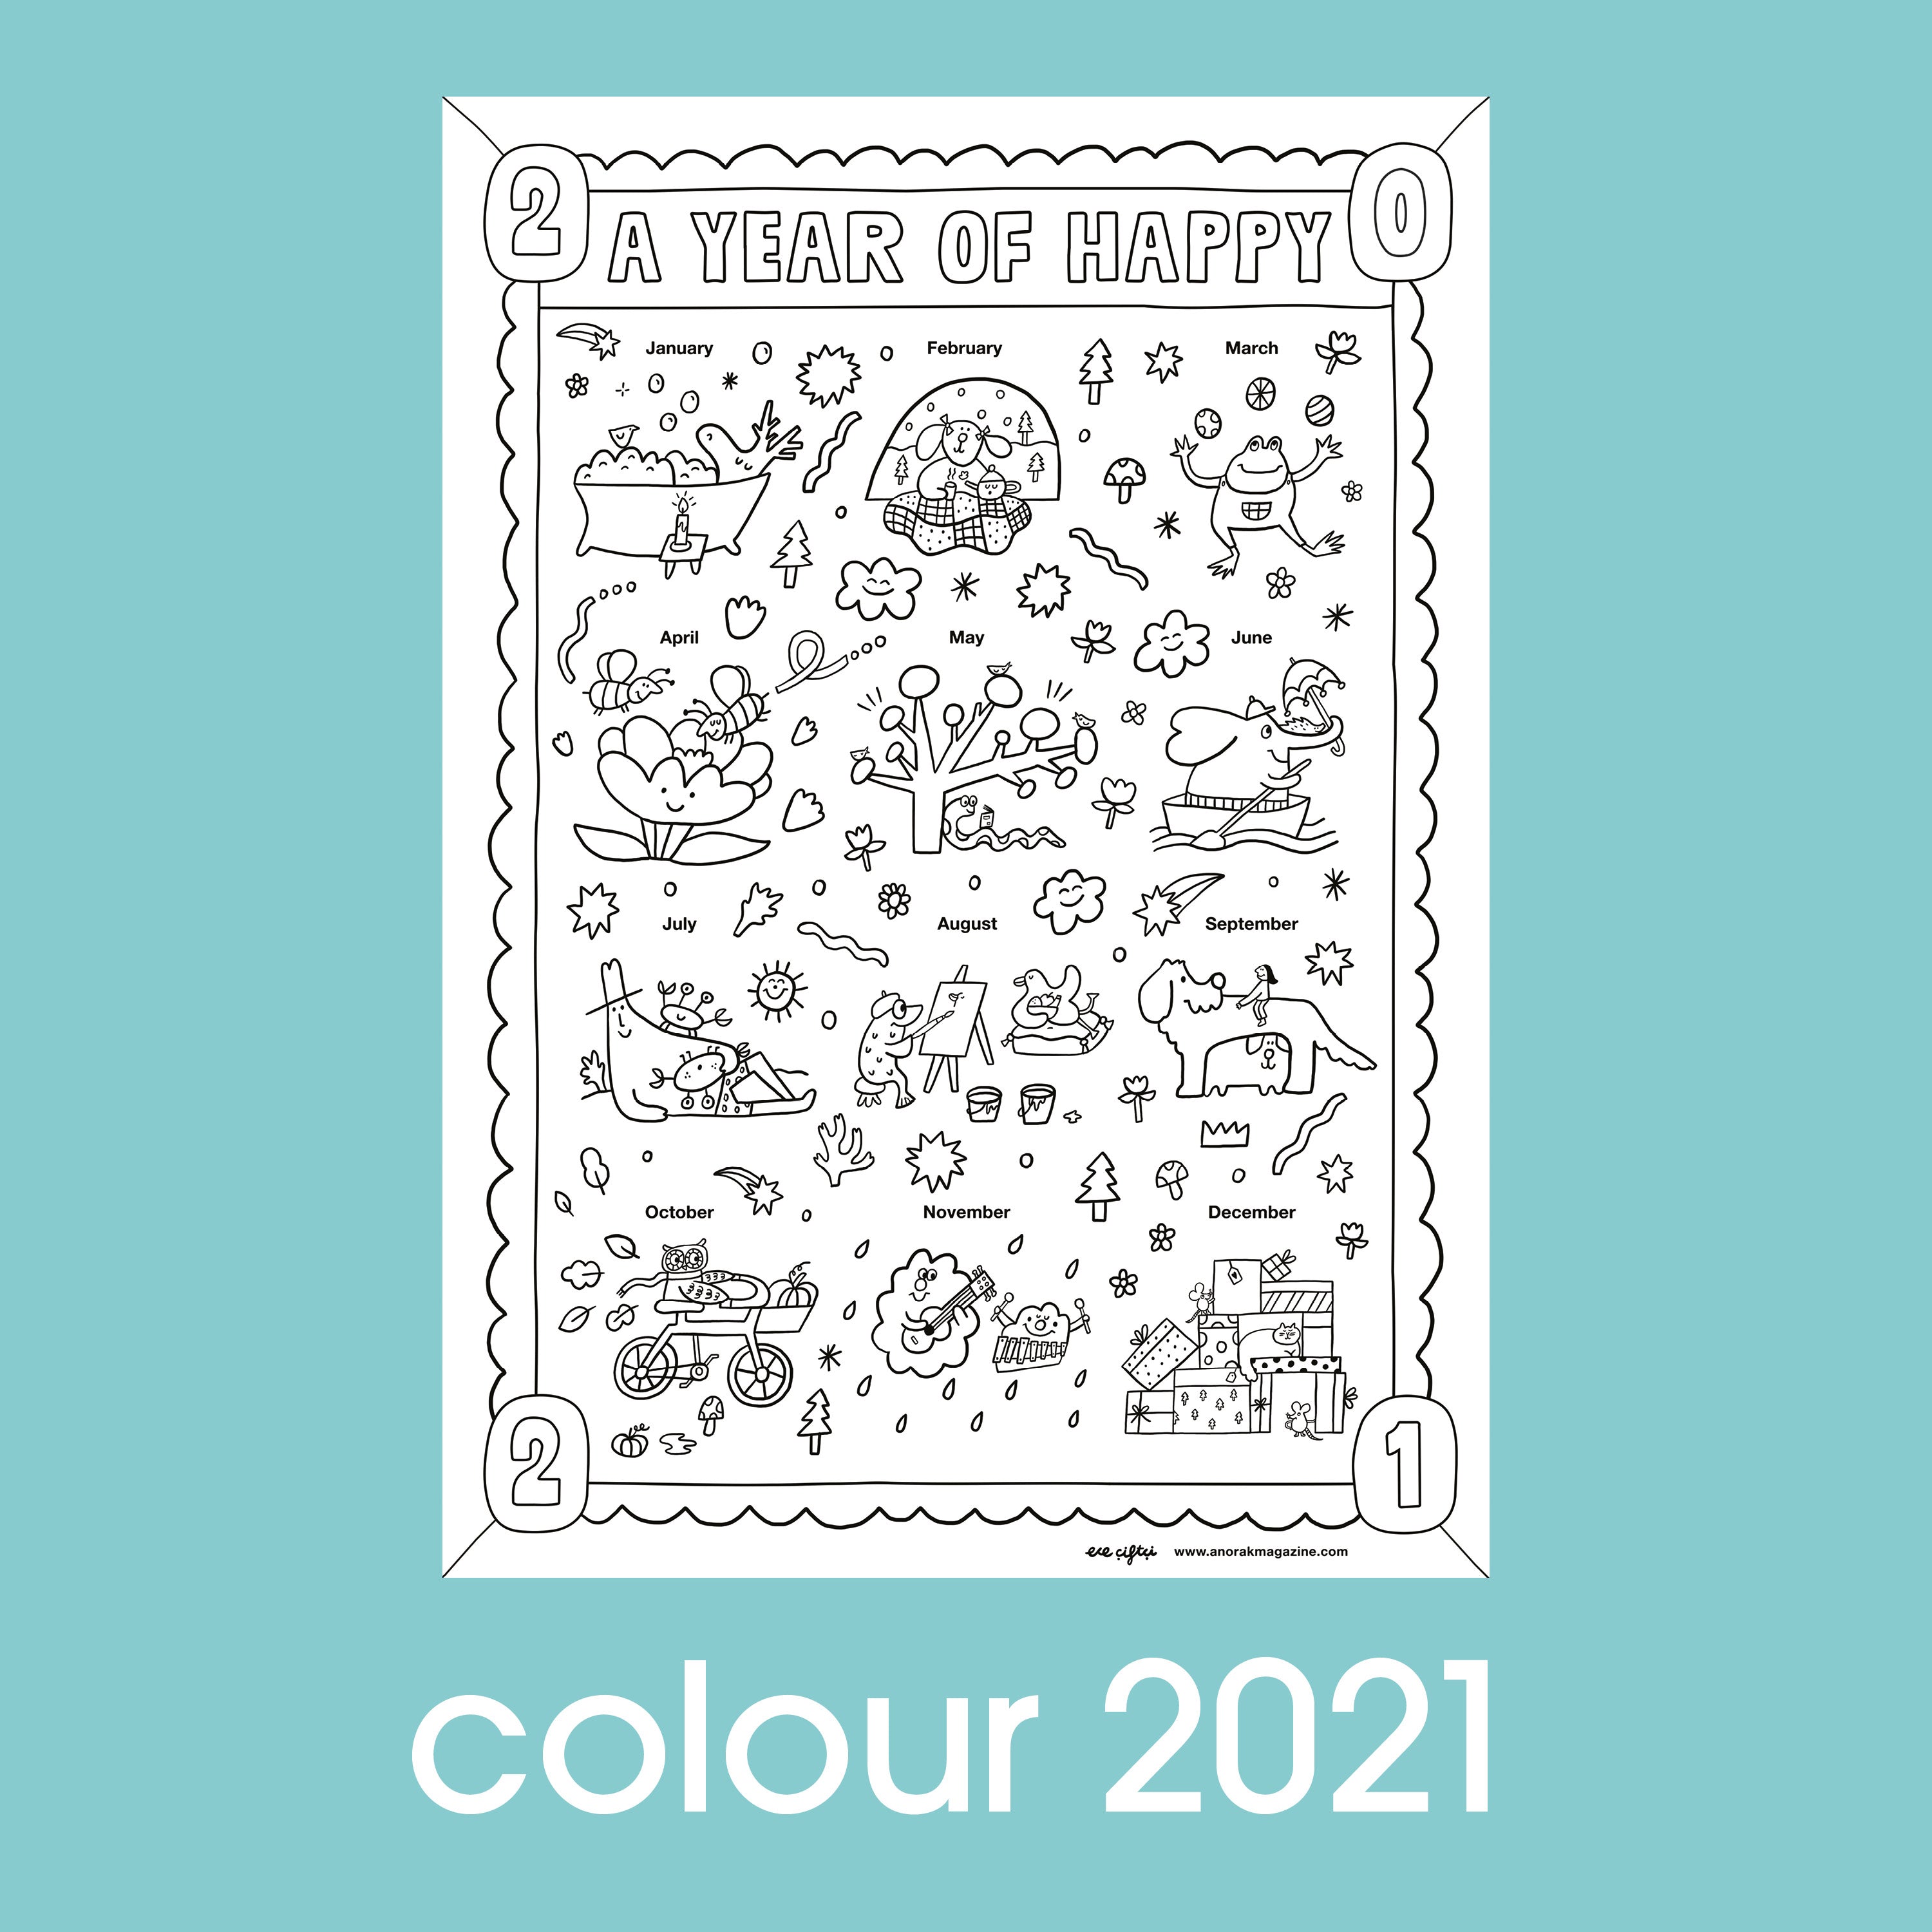 colour 2021 happy